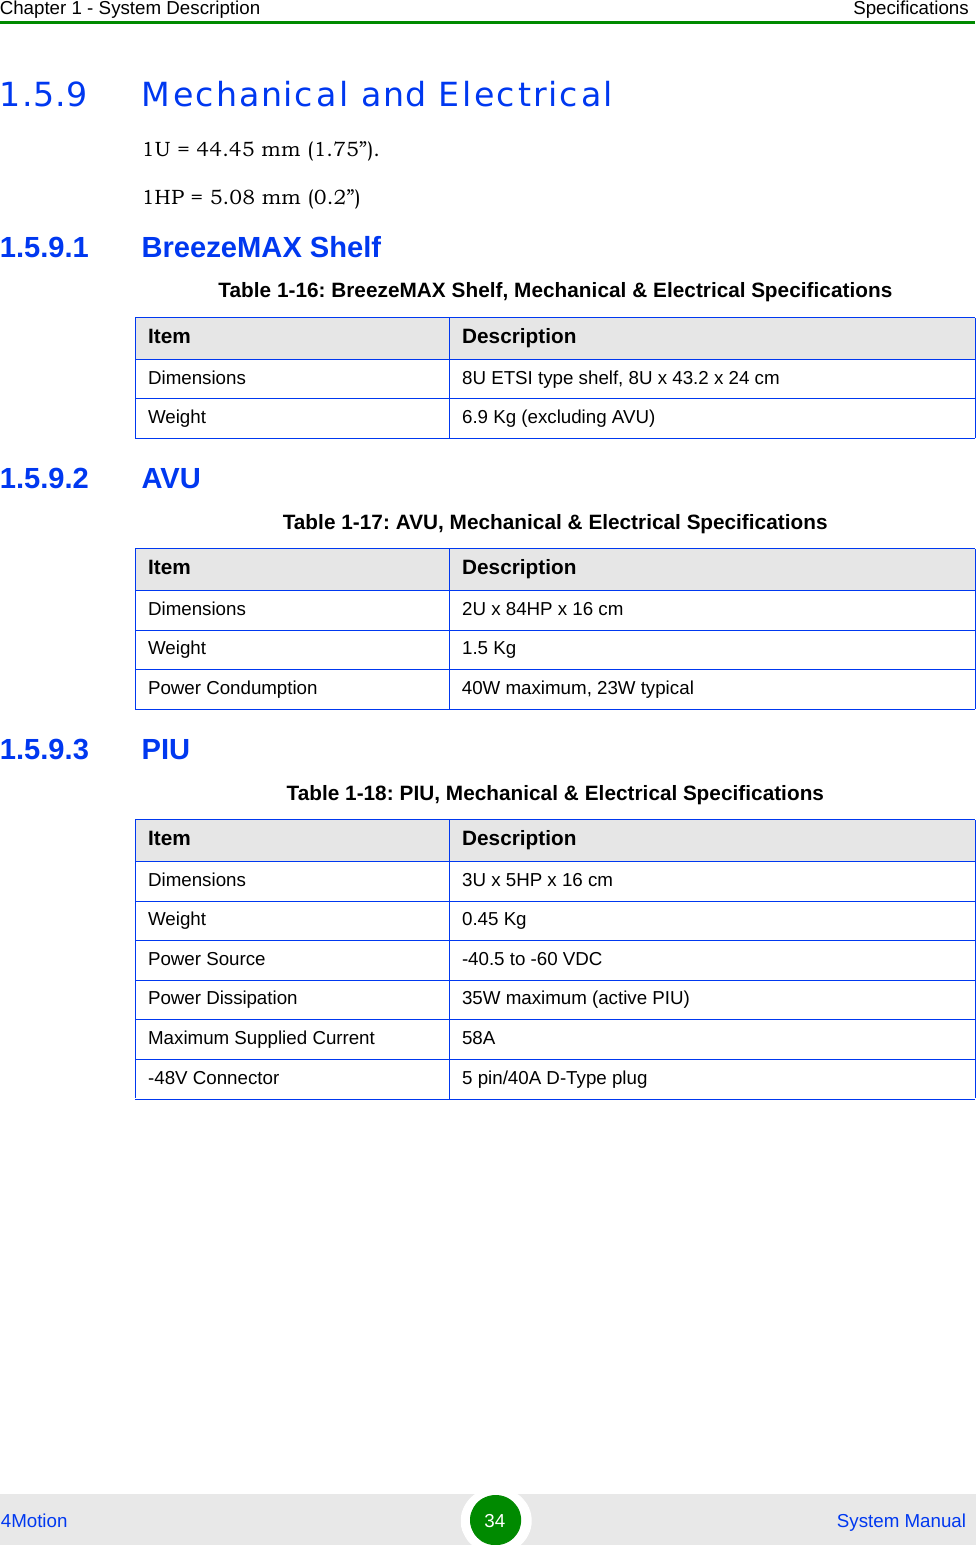 Chapter 1 - System Description Specifications4Motion 34  System Manual1.5.9 Mechanical and Electrical1U = 44.45 mm (1.75”).1HP = 5.08 mm (0.2”)1.5.9.1 BreezeMAX Shelf1.5.9.2 AVU1.5.9.3 PIUTable 1-16: BreezeMAX Shelf, Mechanical &amp; Electrical SpecificationsItem DescriptionDimensions 8U ETSI type shelf, 8U x 43.2 x 24 cmWeight 6.9 Kg (excluding AVU)Table 1-17: AVU, Mechanical &amp; Electrical SpecificationsItem DescriptionDimensions 2U x 84HP x 16 cmWeight 1.5 KgPower Condumption 40W maximum, 23W typicalTable 1-18: PIU, Mechanical &amp; Electrical SpecificationsItem DescriptionDimensions 3U x 5HP x 16 cmWeight 0.45 KgPower Source -40.5 to -60 VDCPower Dissipation 35W maximum (active PIU)Maximum Supplied Current 58A-48V Connector 5 pin/40A D-Type plug